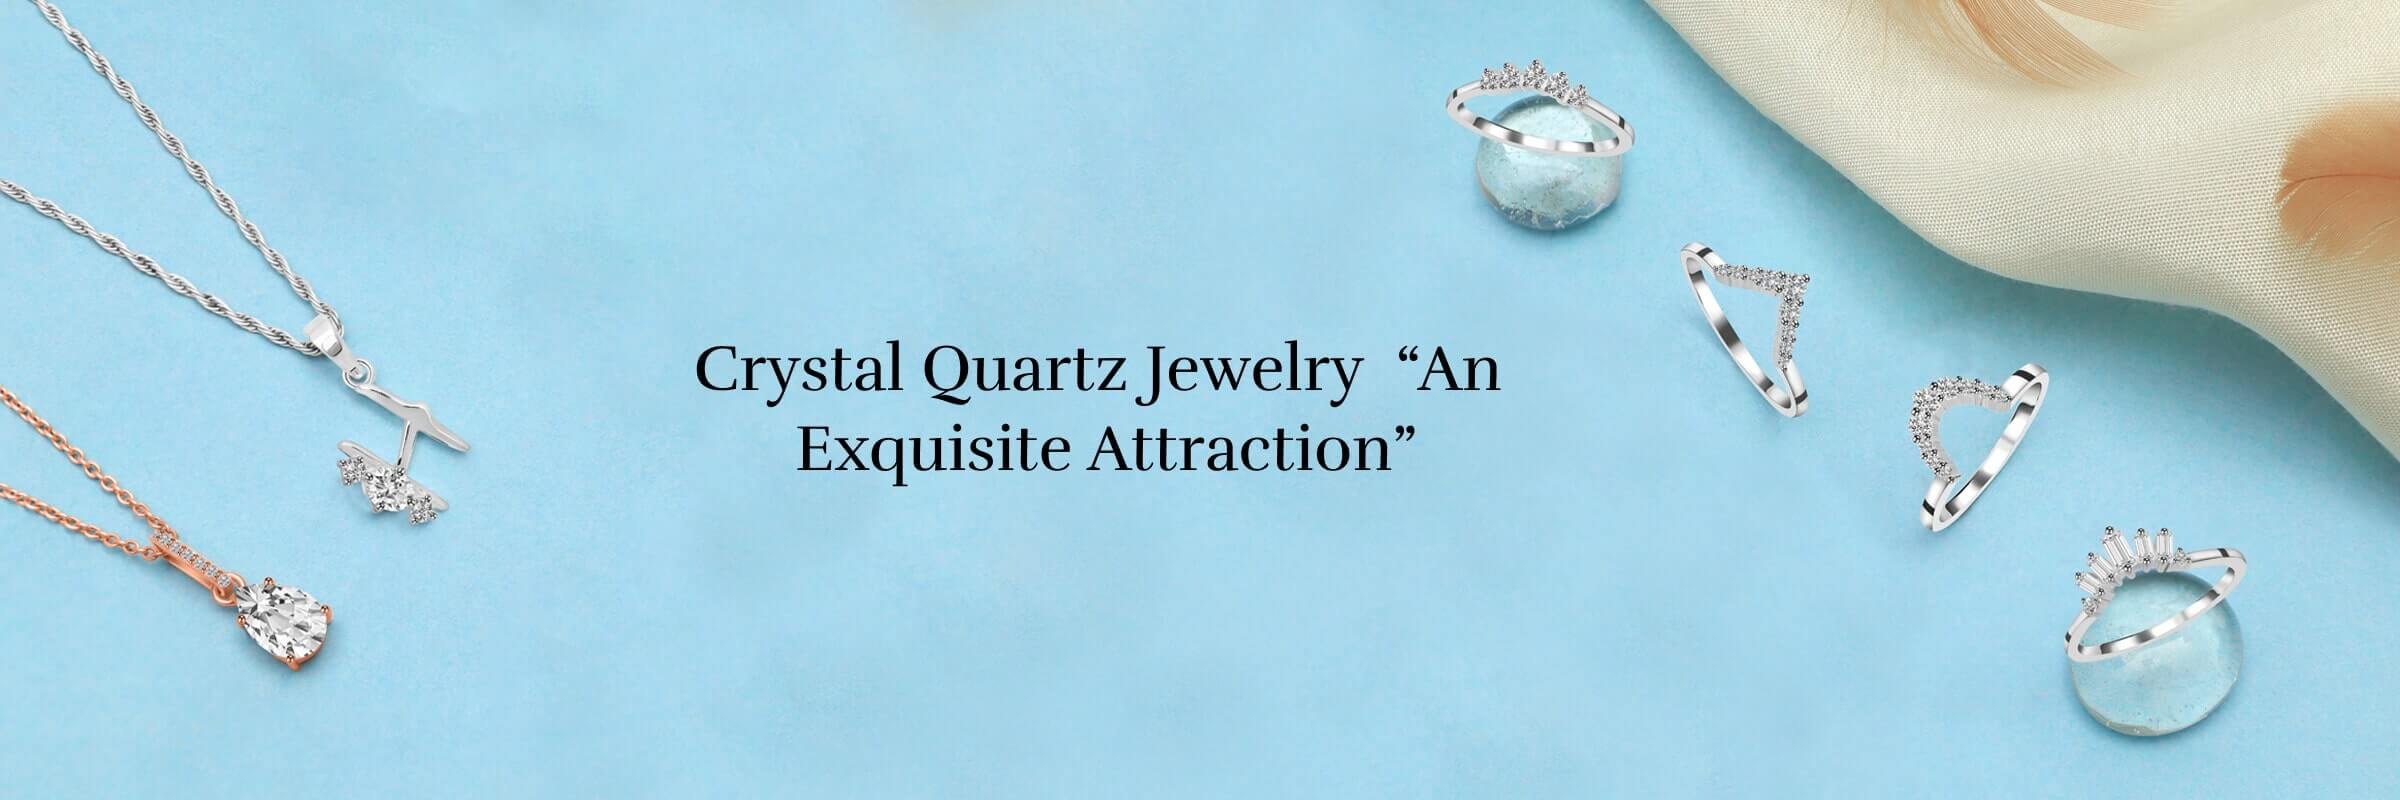 Crystal Quartz Jewelry